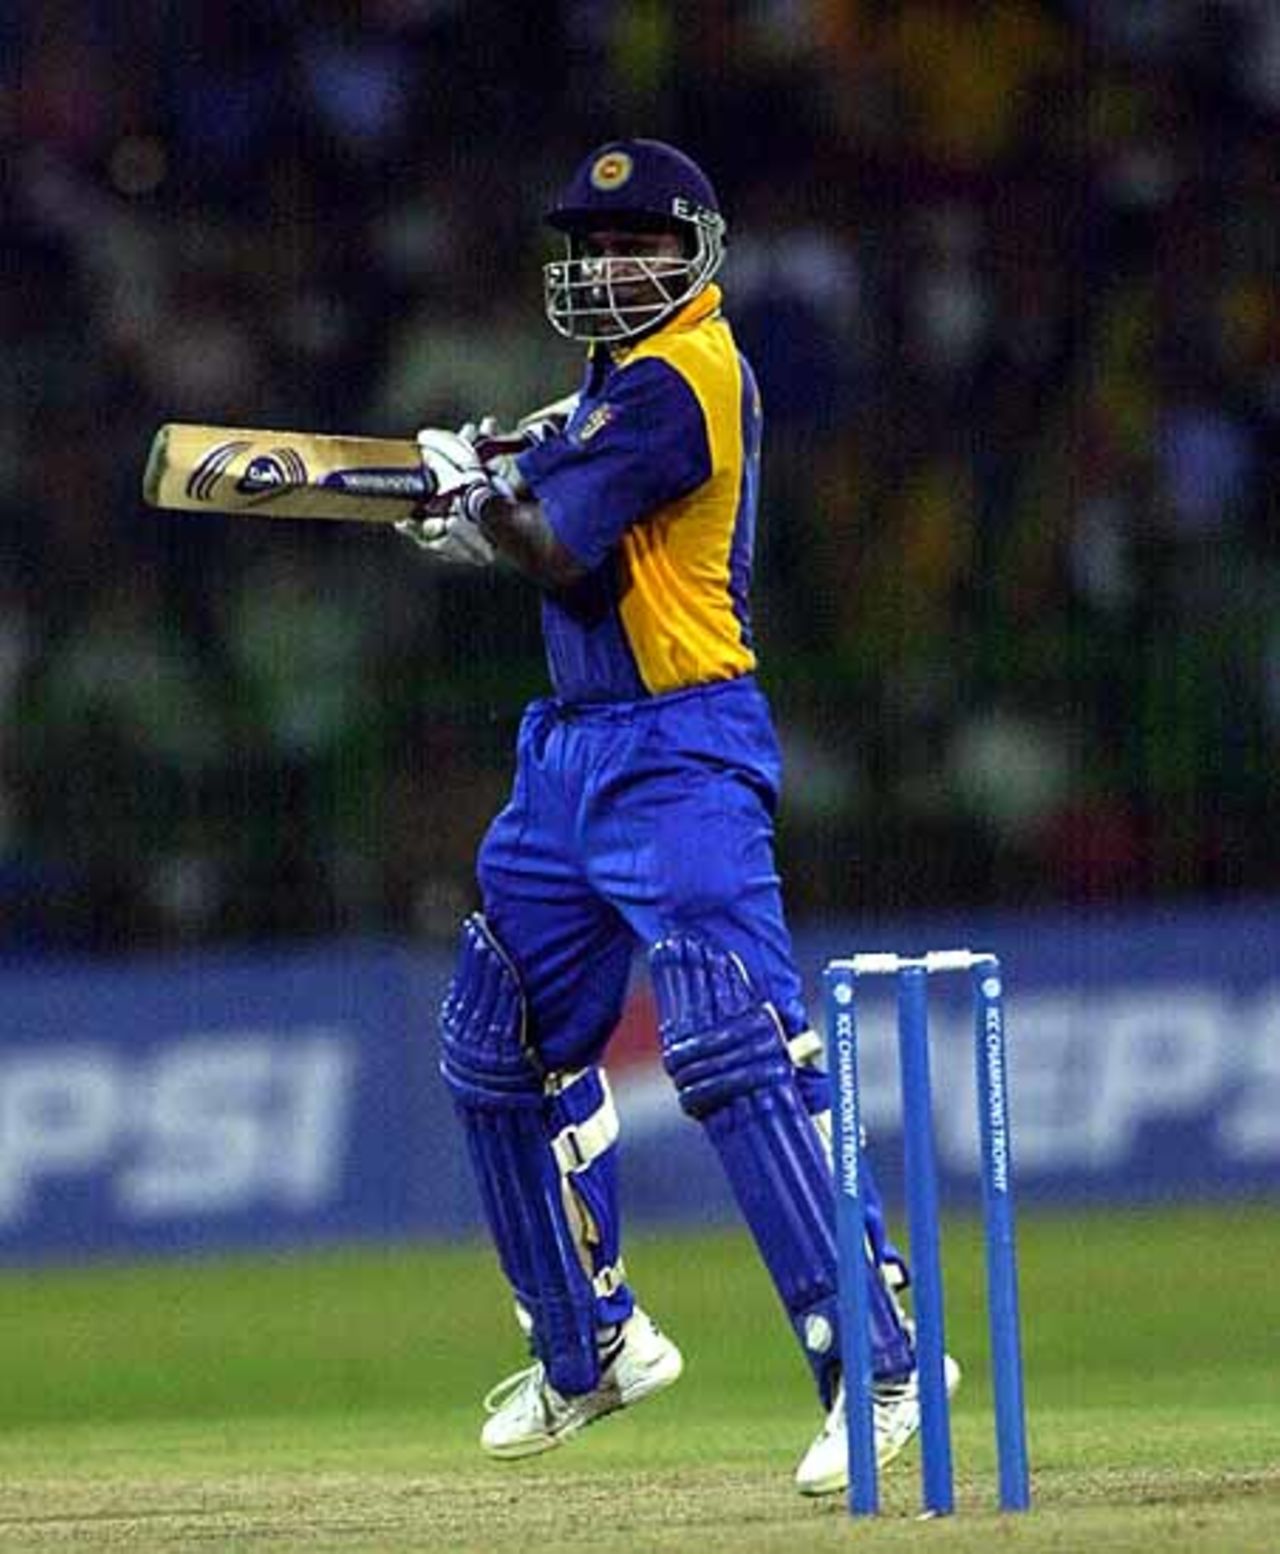 Sri Lanka v Pakistan, 1st One Day International, R.Premadasa Stadium, Colombo, 12 September 2002